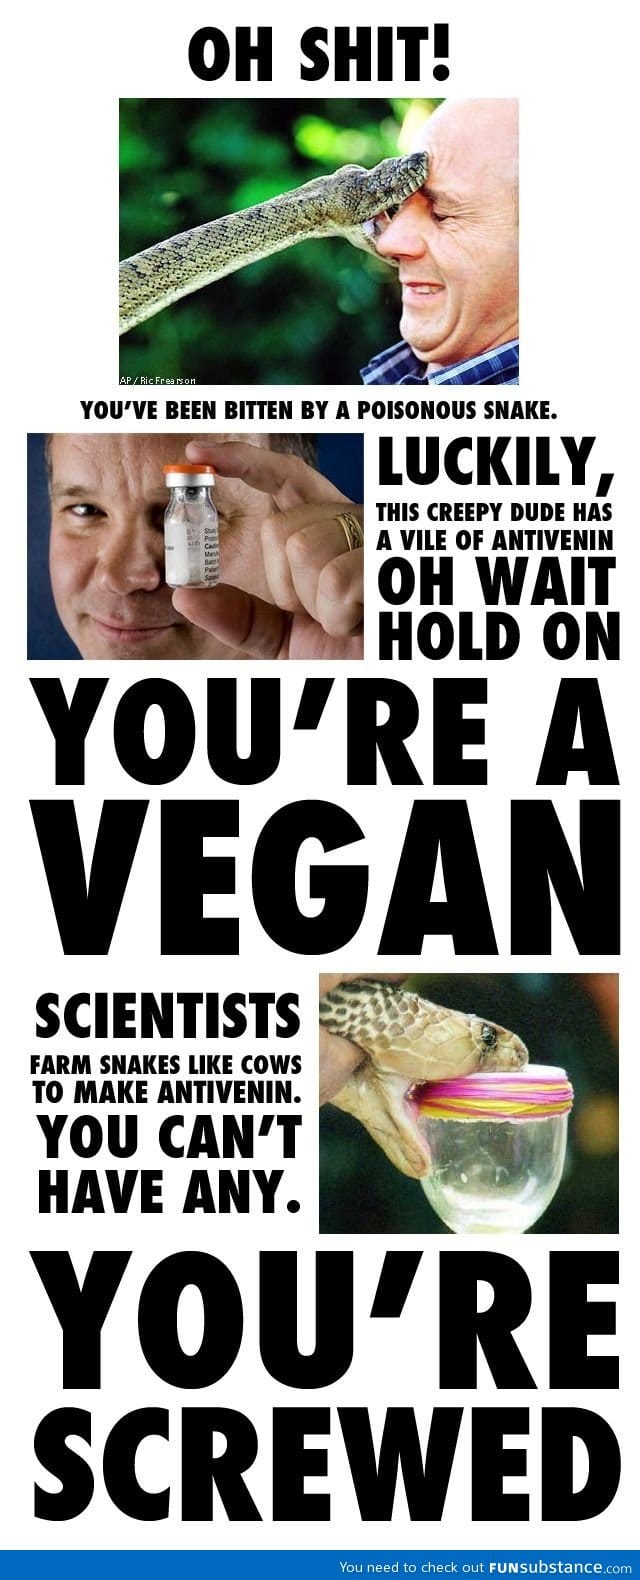 Vegans can't use anti-venom